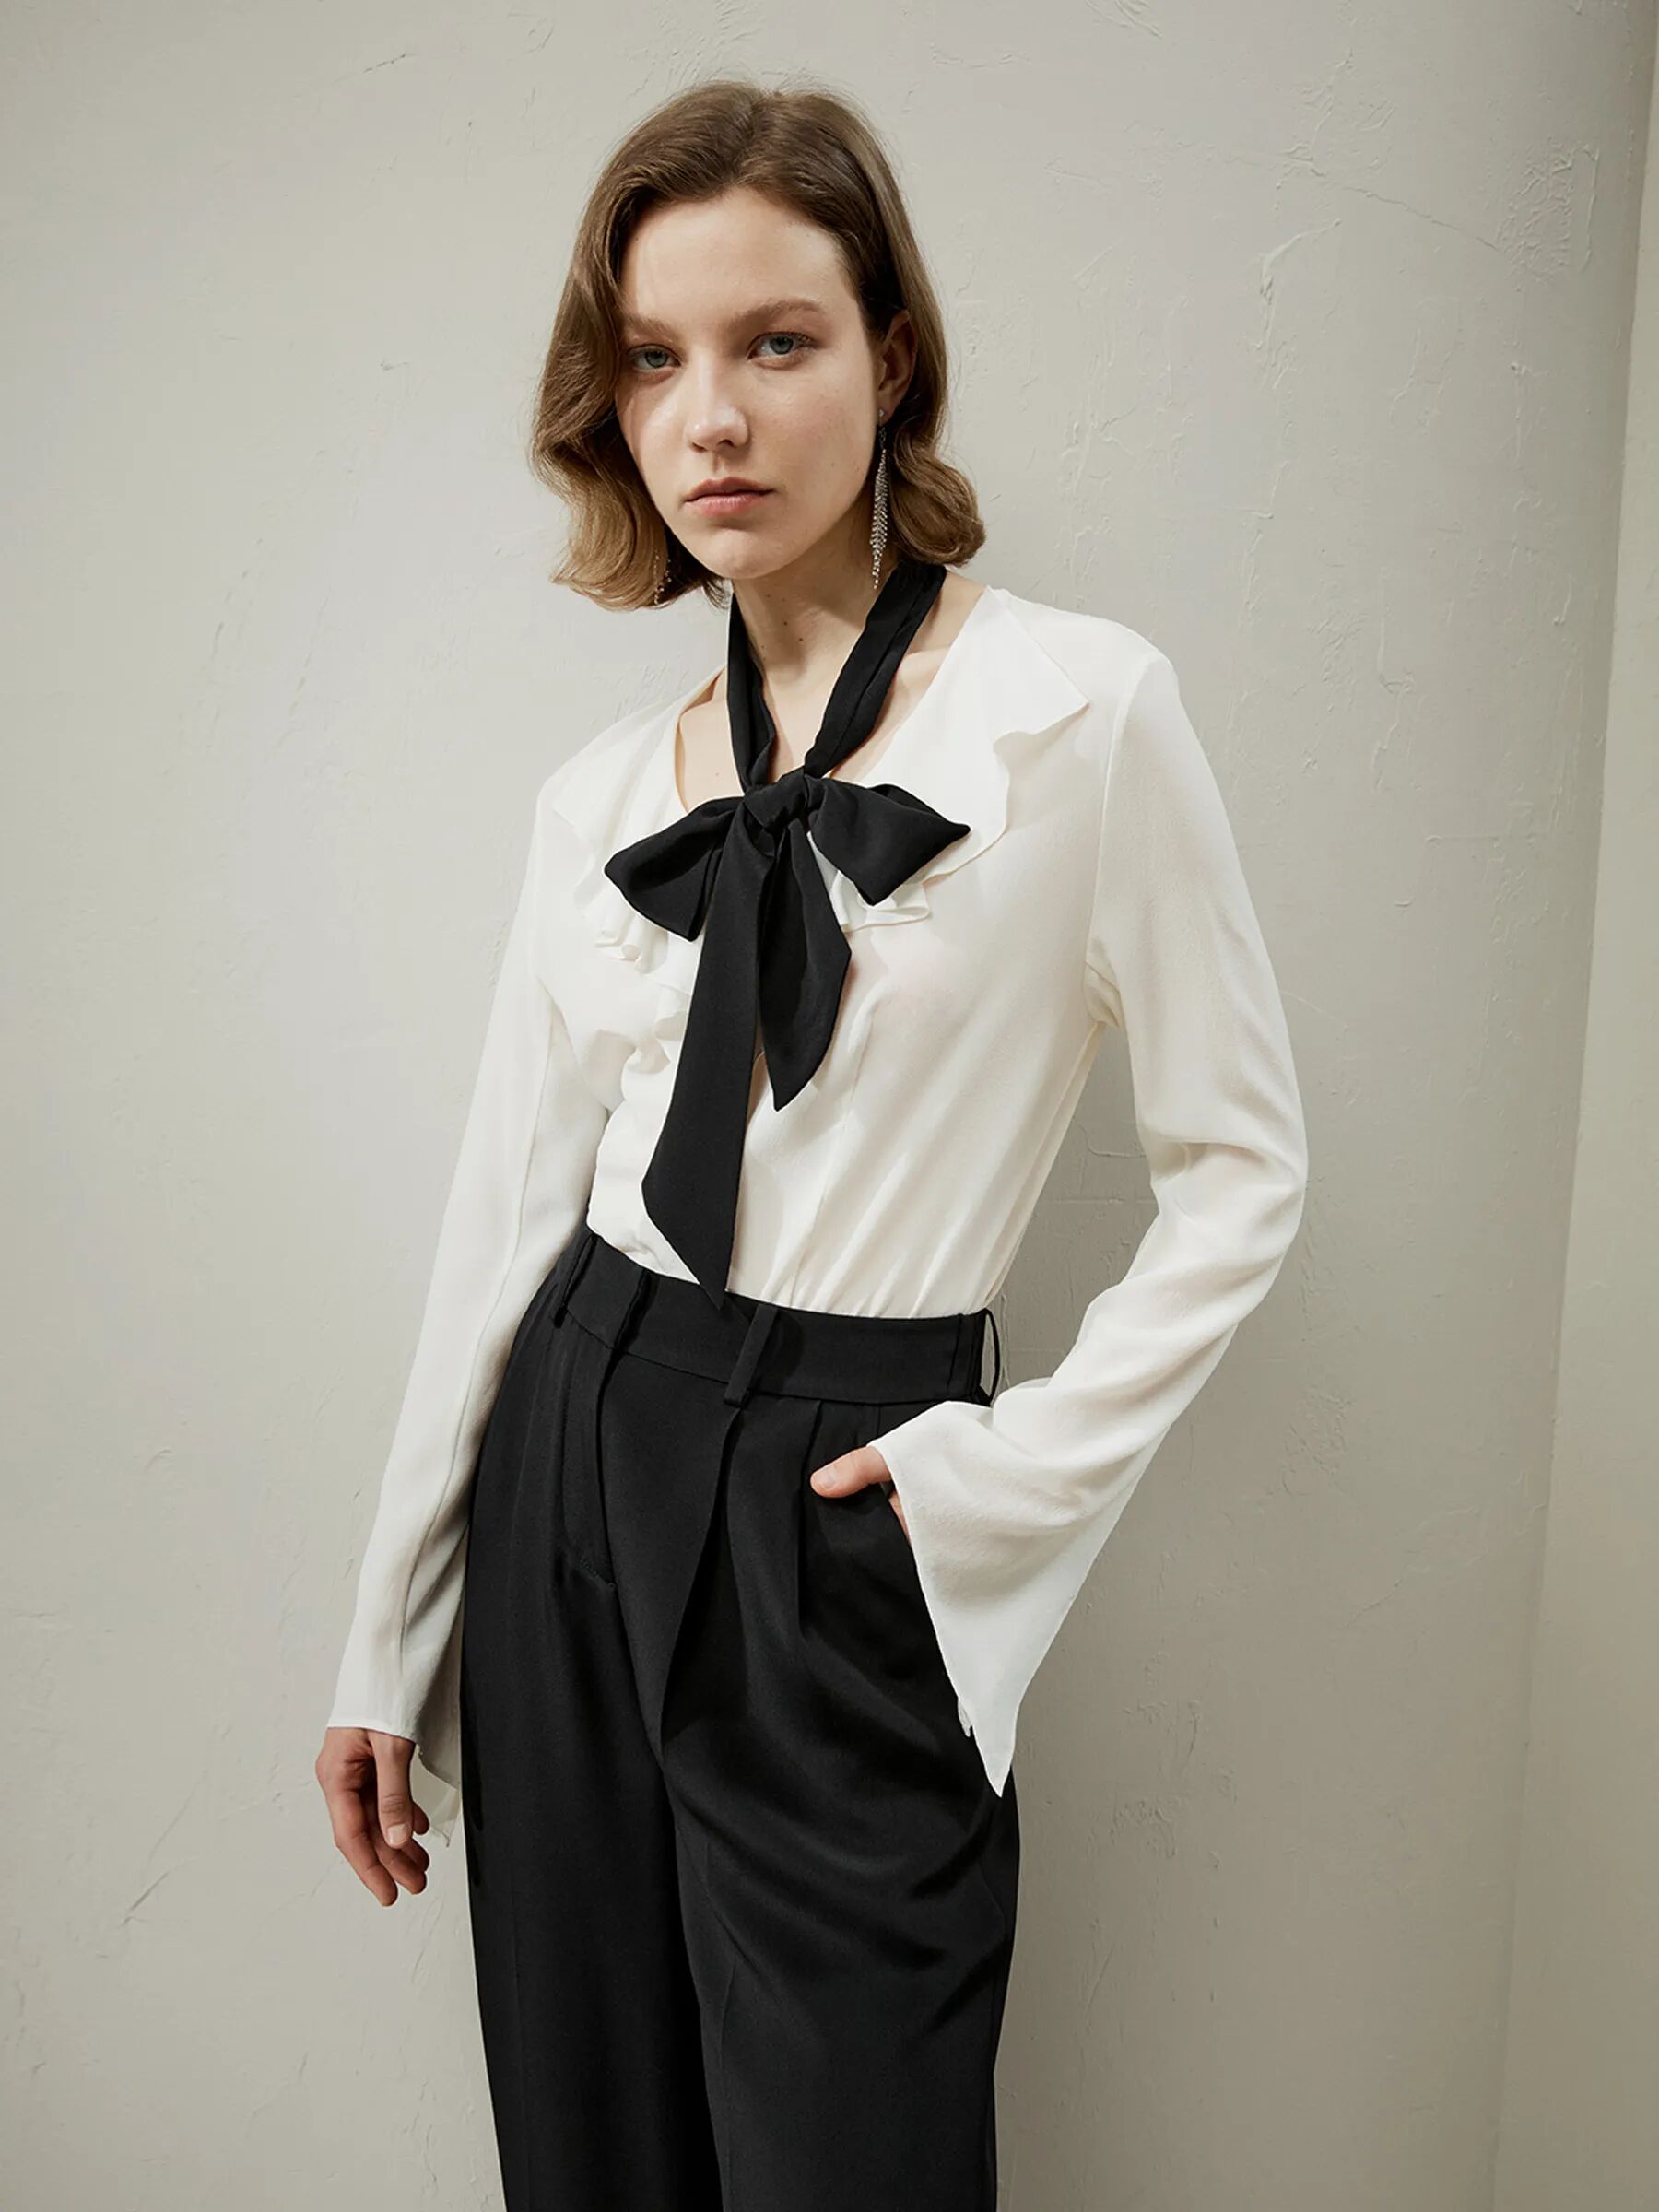 LILYSILK Business White Blouse With Black Bow   Silk Formal   Tops For Women Trumpet Sleeve Side Slit Elegant And Feminine Light Soft 12